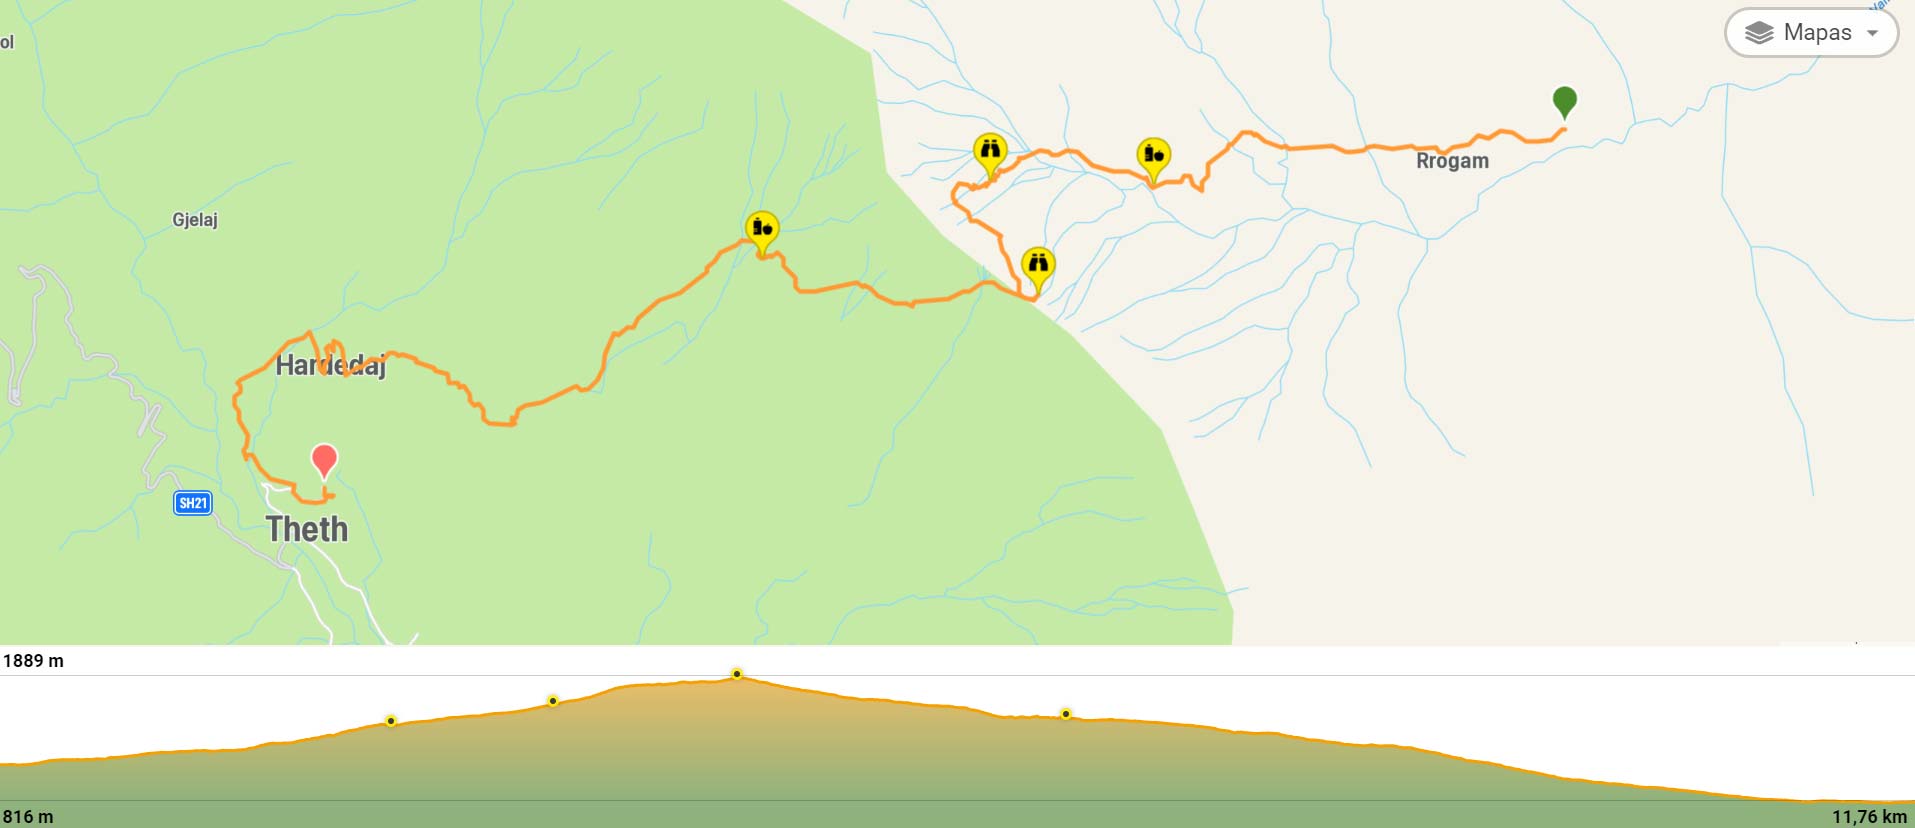 Mapa de la ruta de trekking de Valbone a Theth